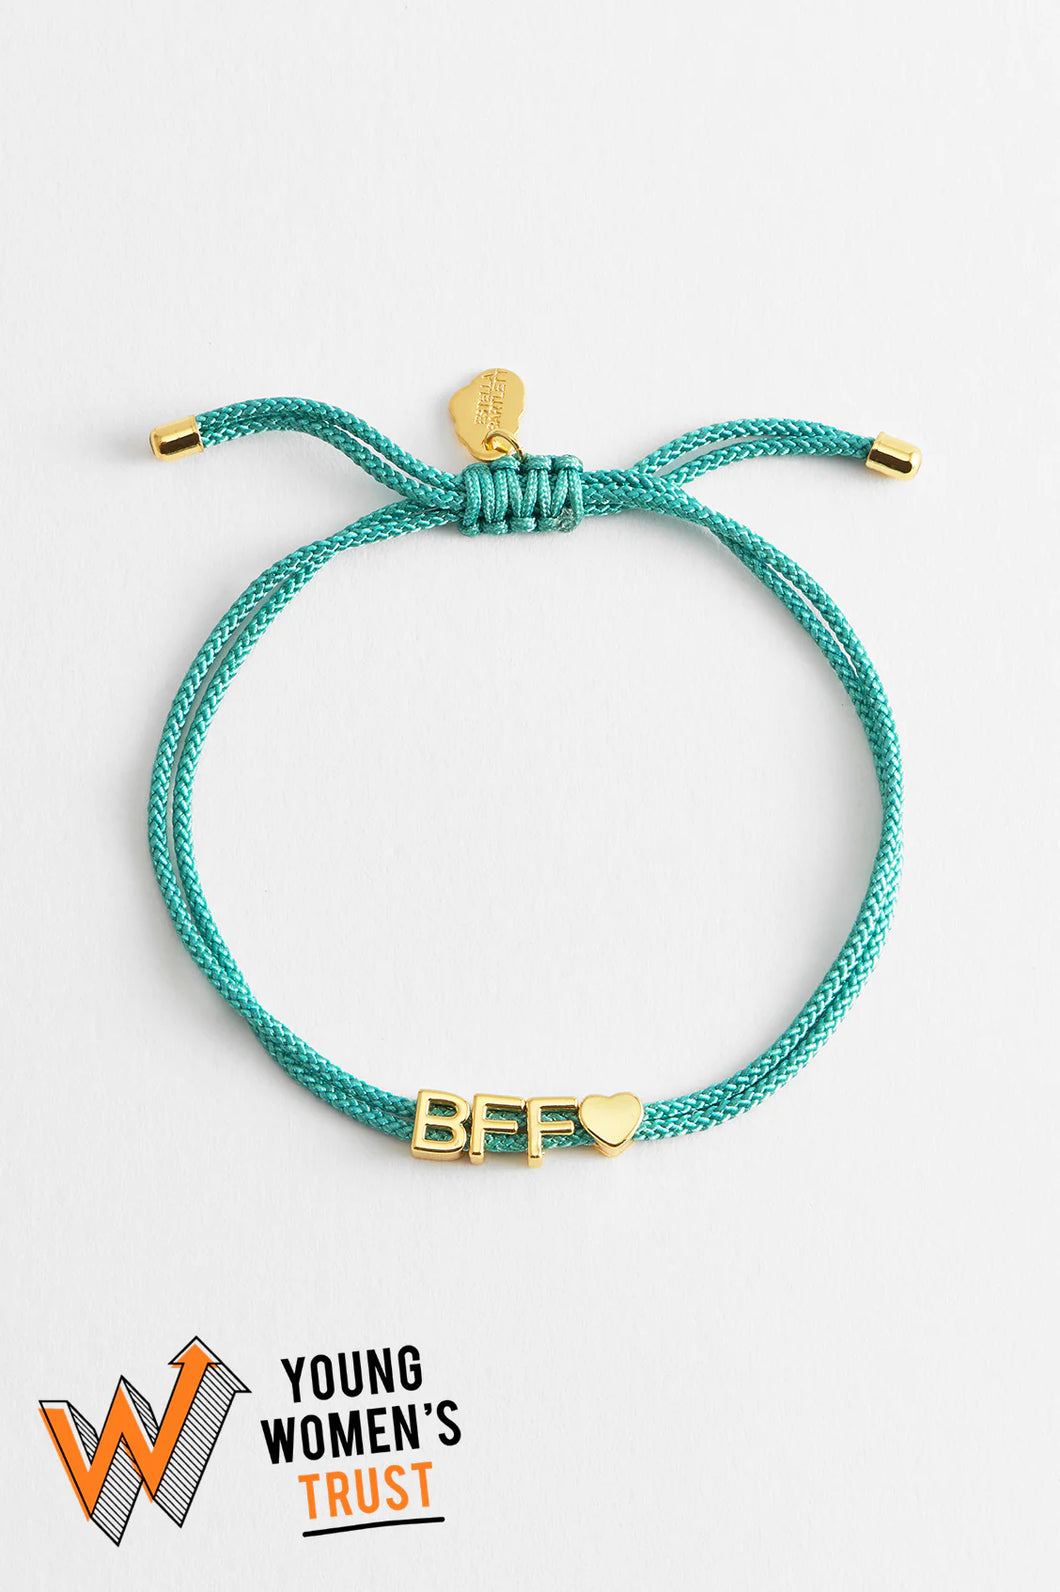 Estella Bartlett BFF Bead Turquoise Friendship Bracelet - gold plated